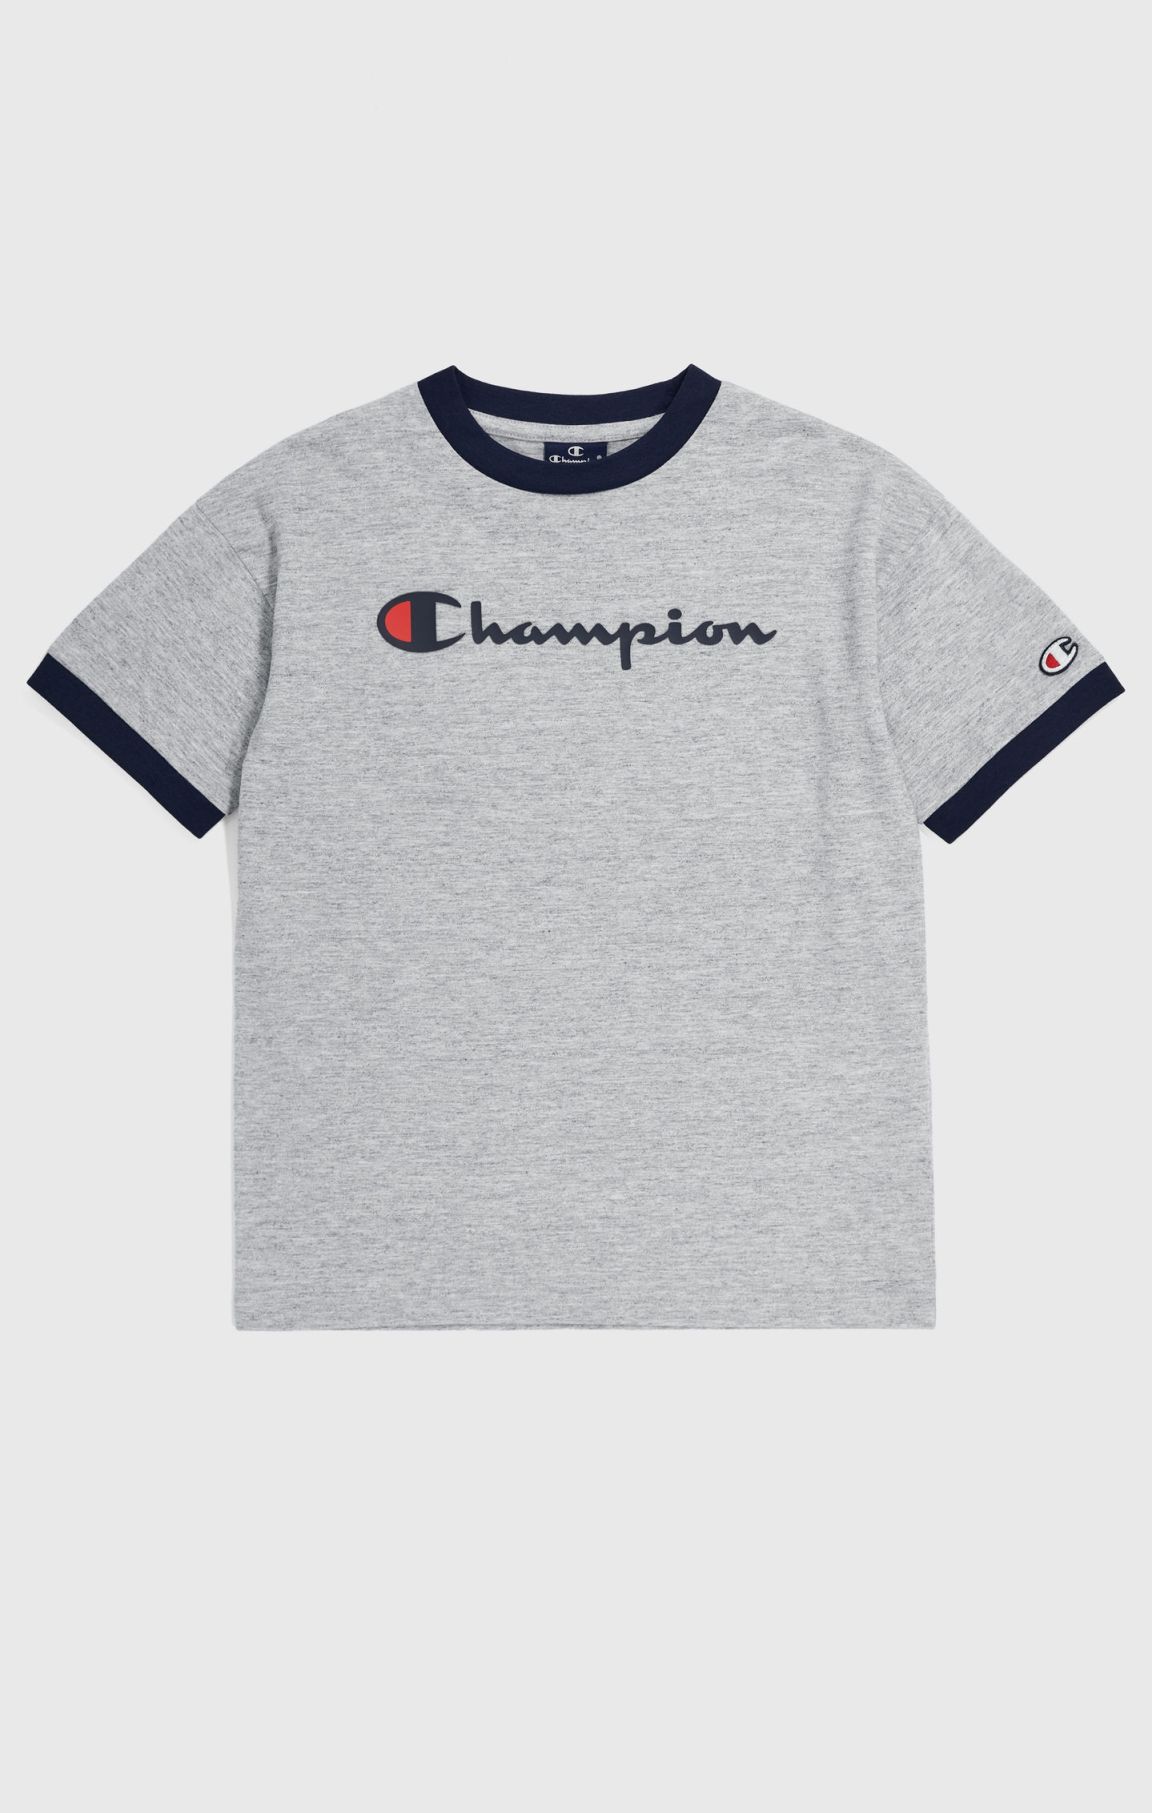 Kinder-T-Shirts | Champion